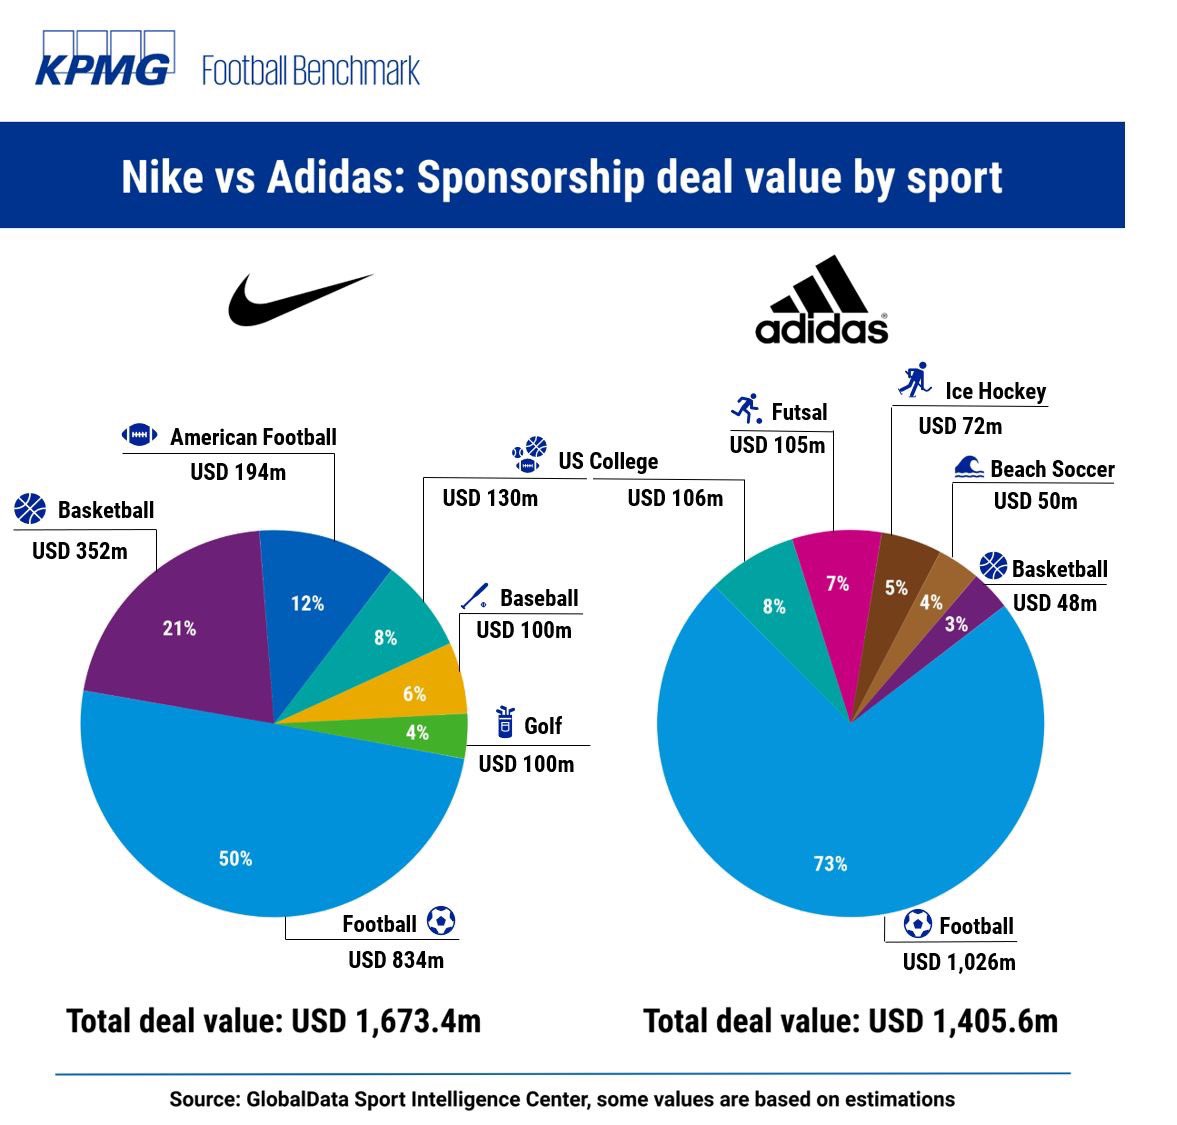 Mourtinho  on Twitter: "Sport sponsorship deals ... #Nike vs #adidas by @KPMG https://t.co/Gaw1VKoeyl" / Twitter